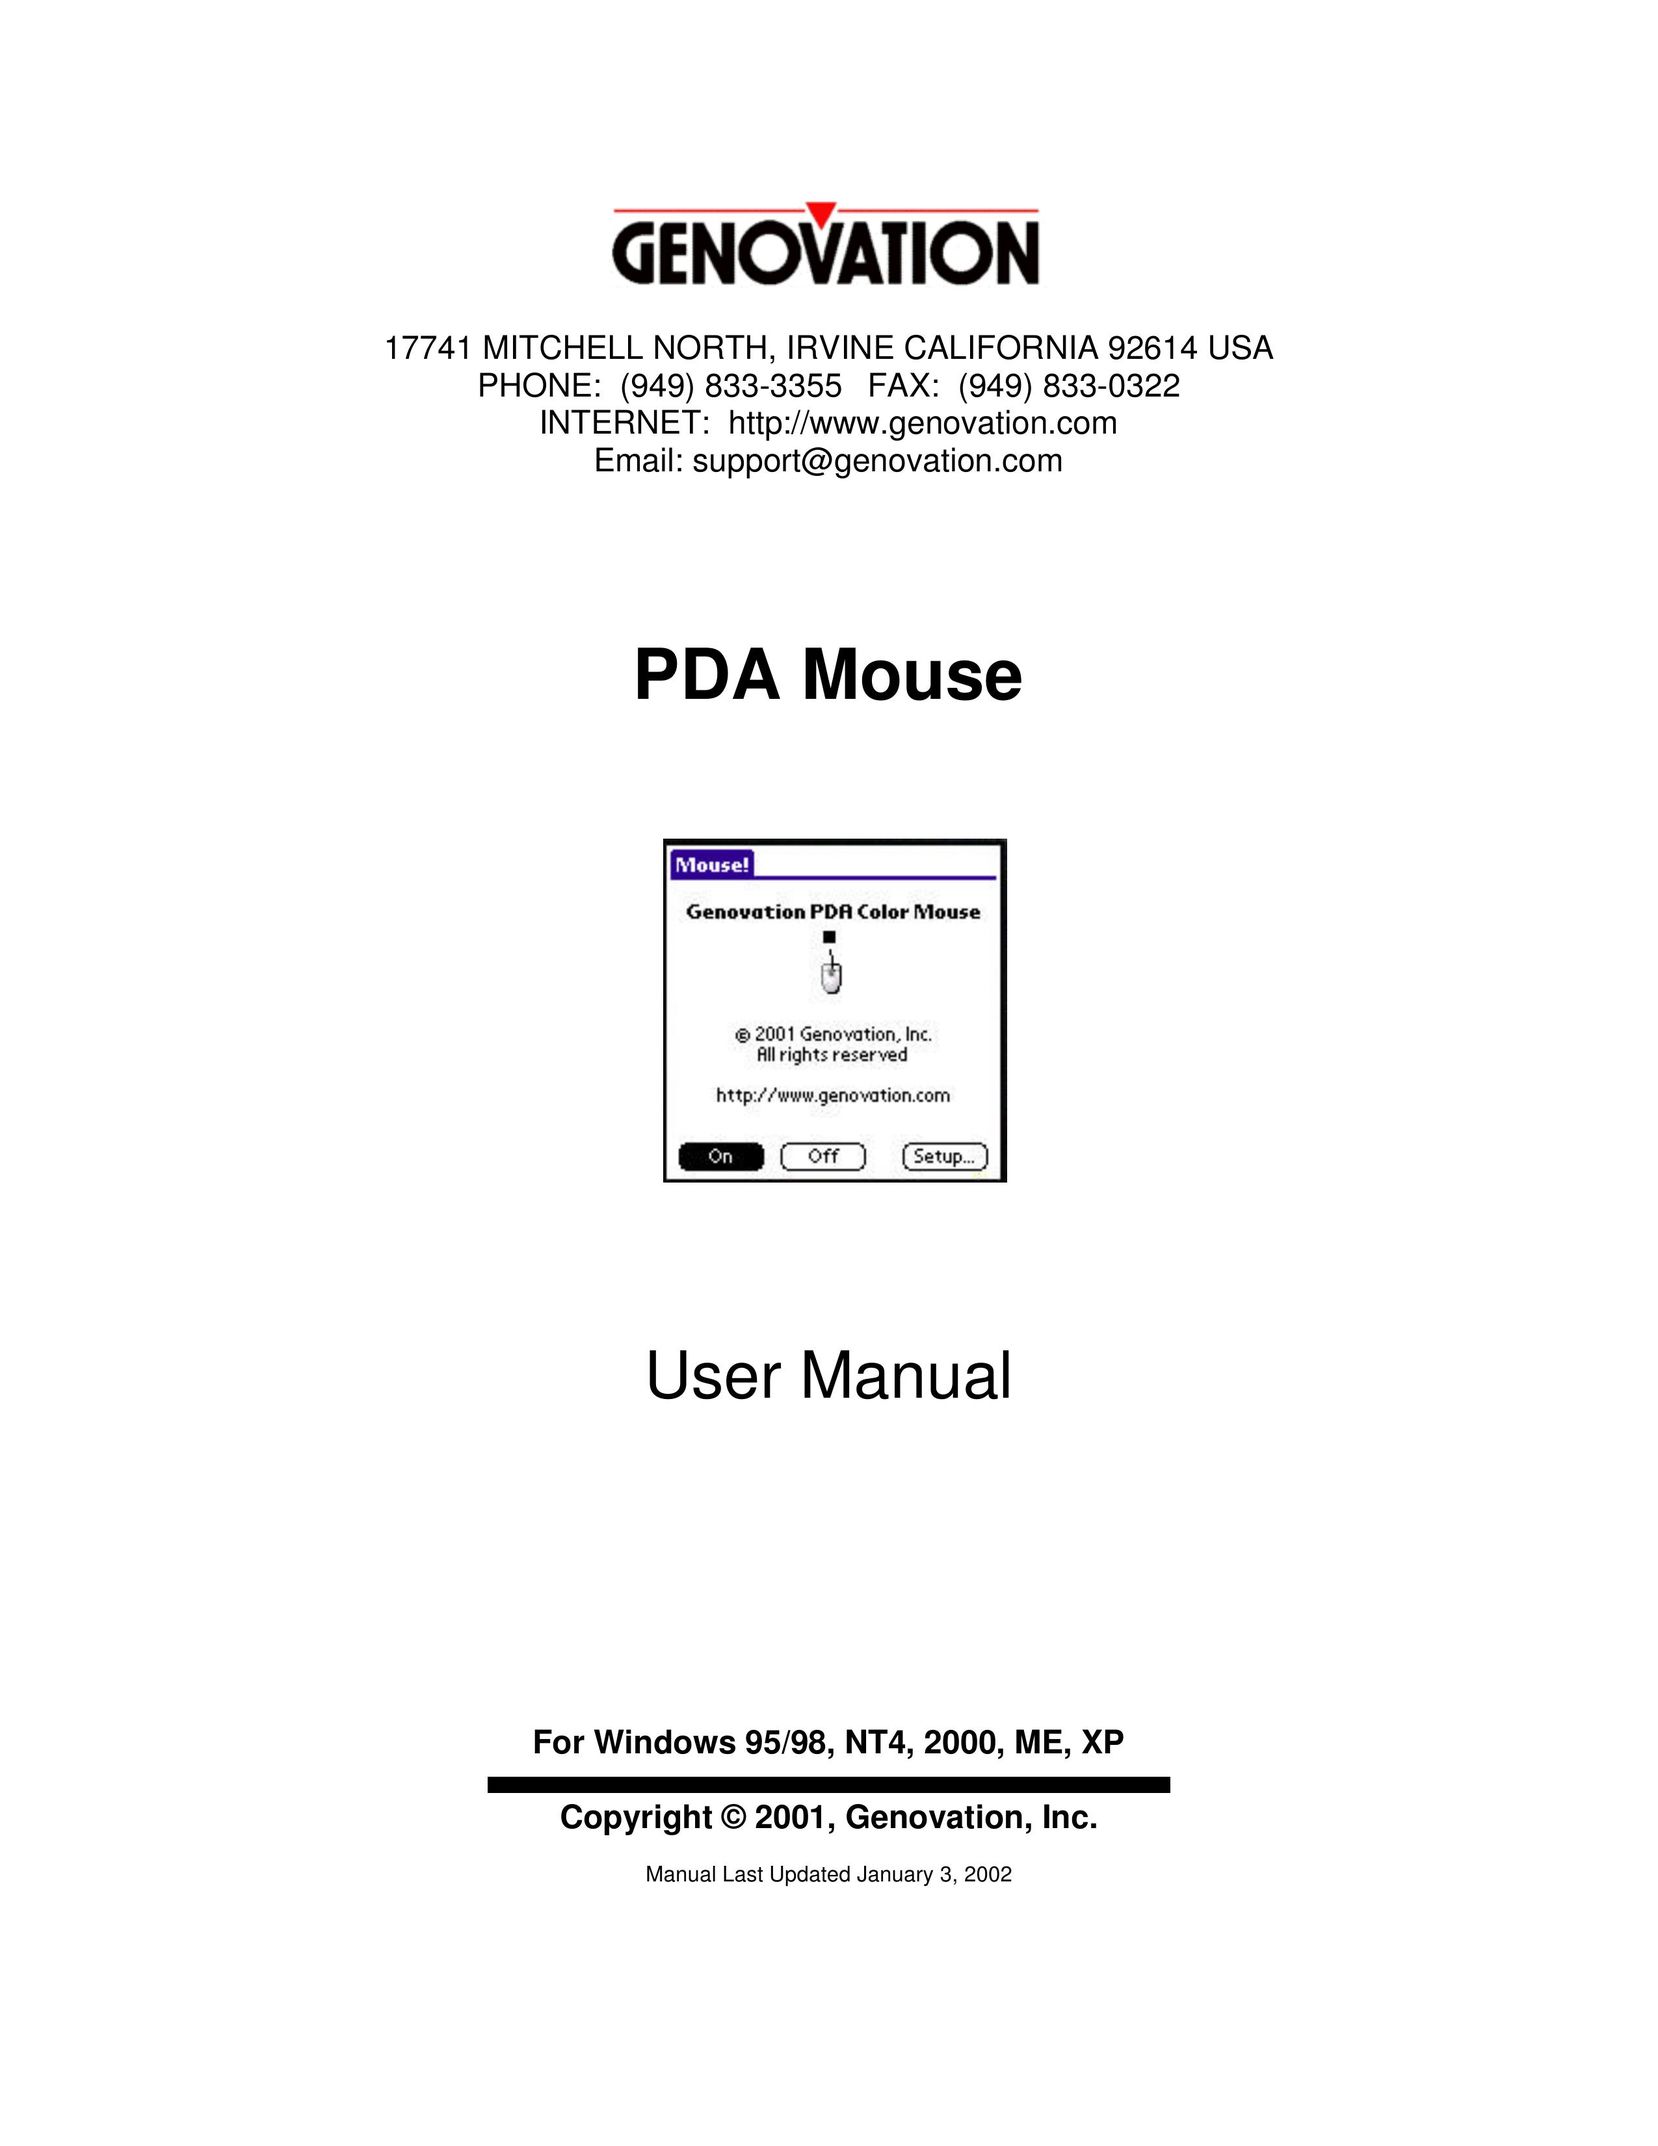 Handspring PDA Mouse PDAs & Smartphones User Manual